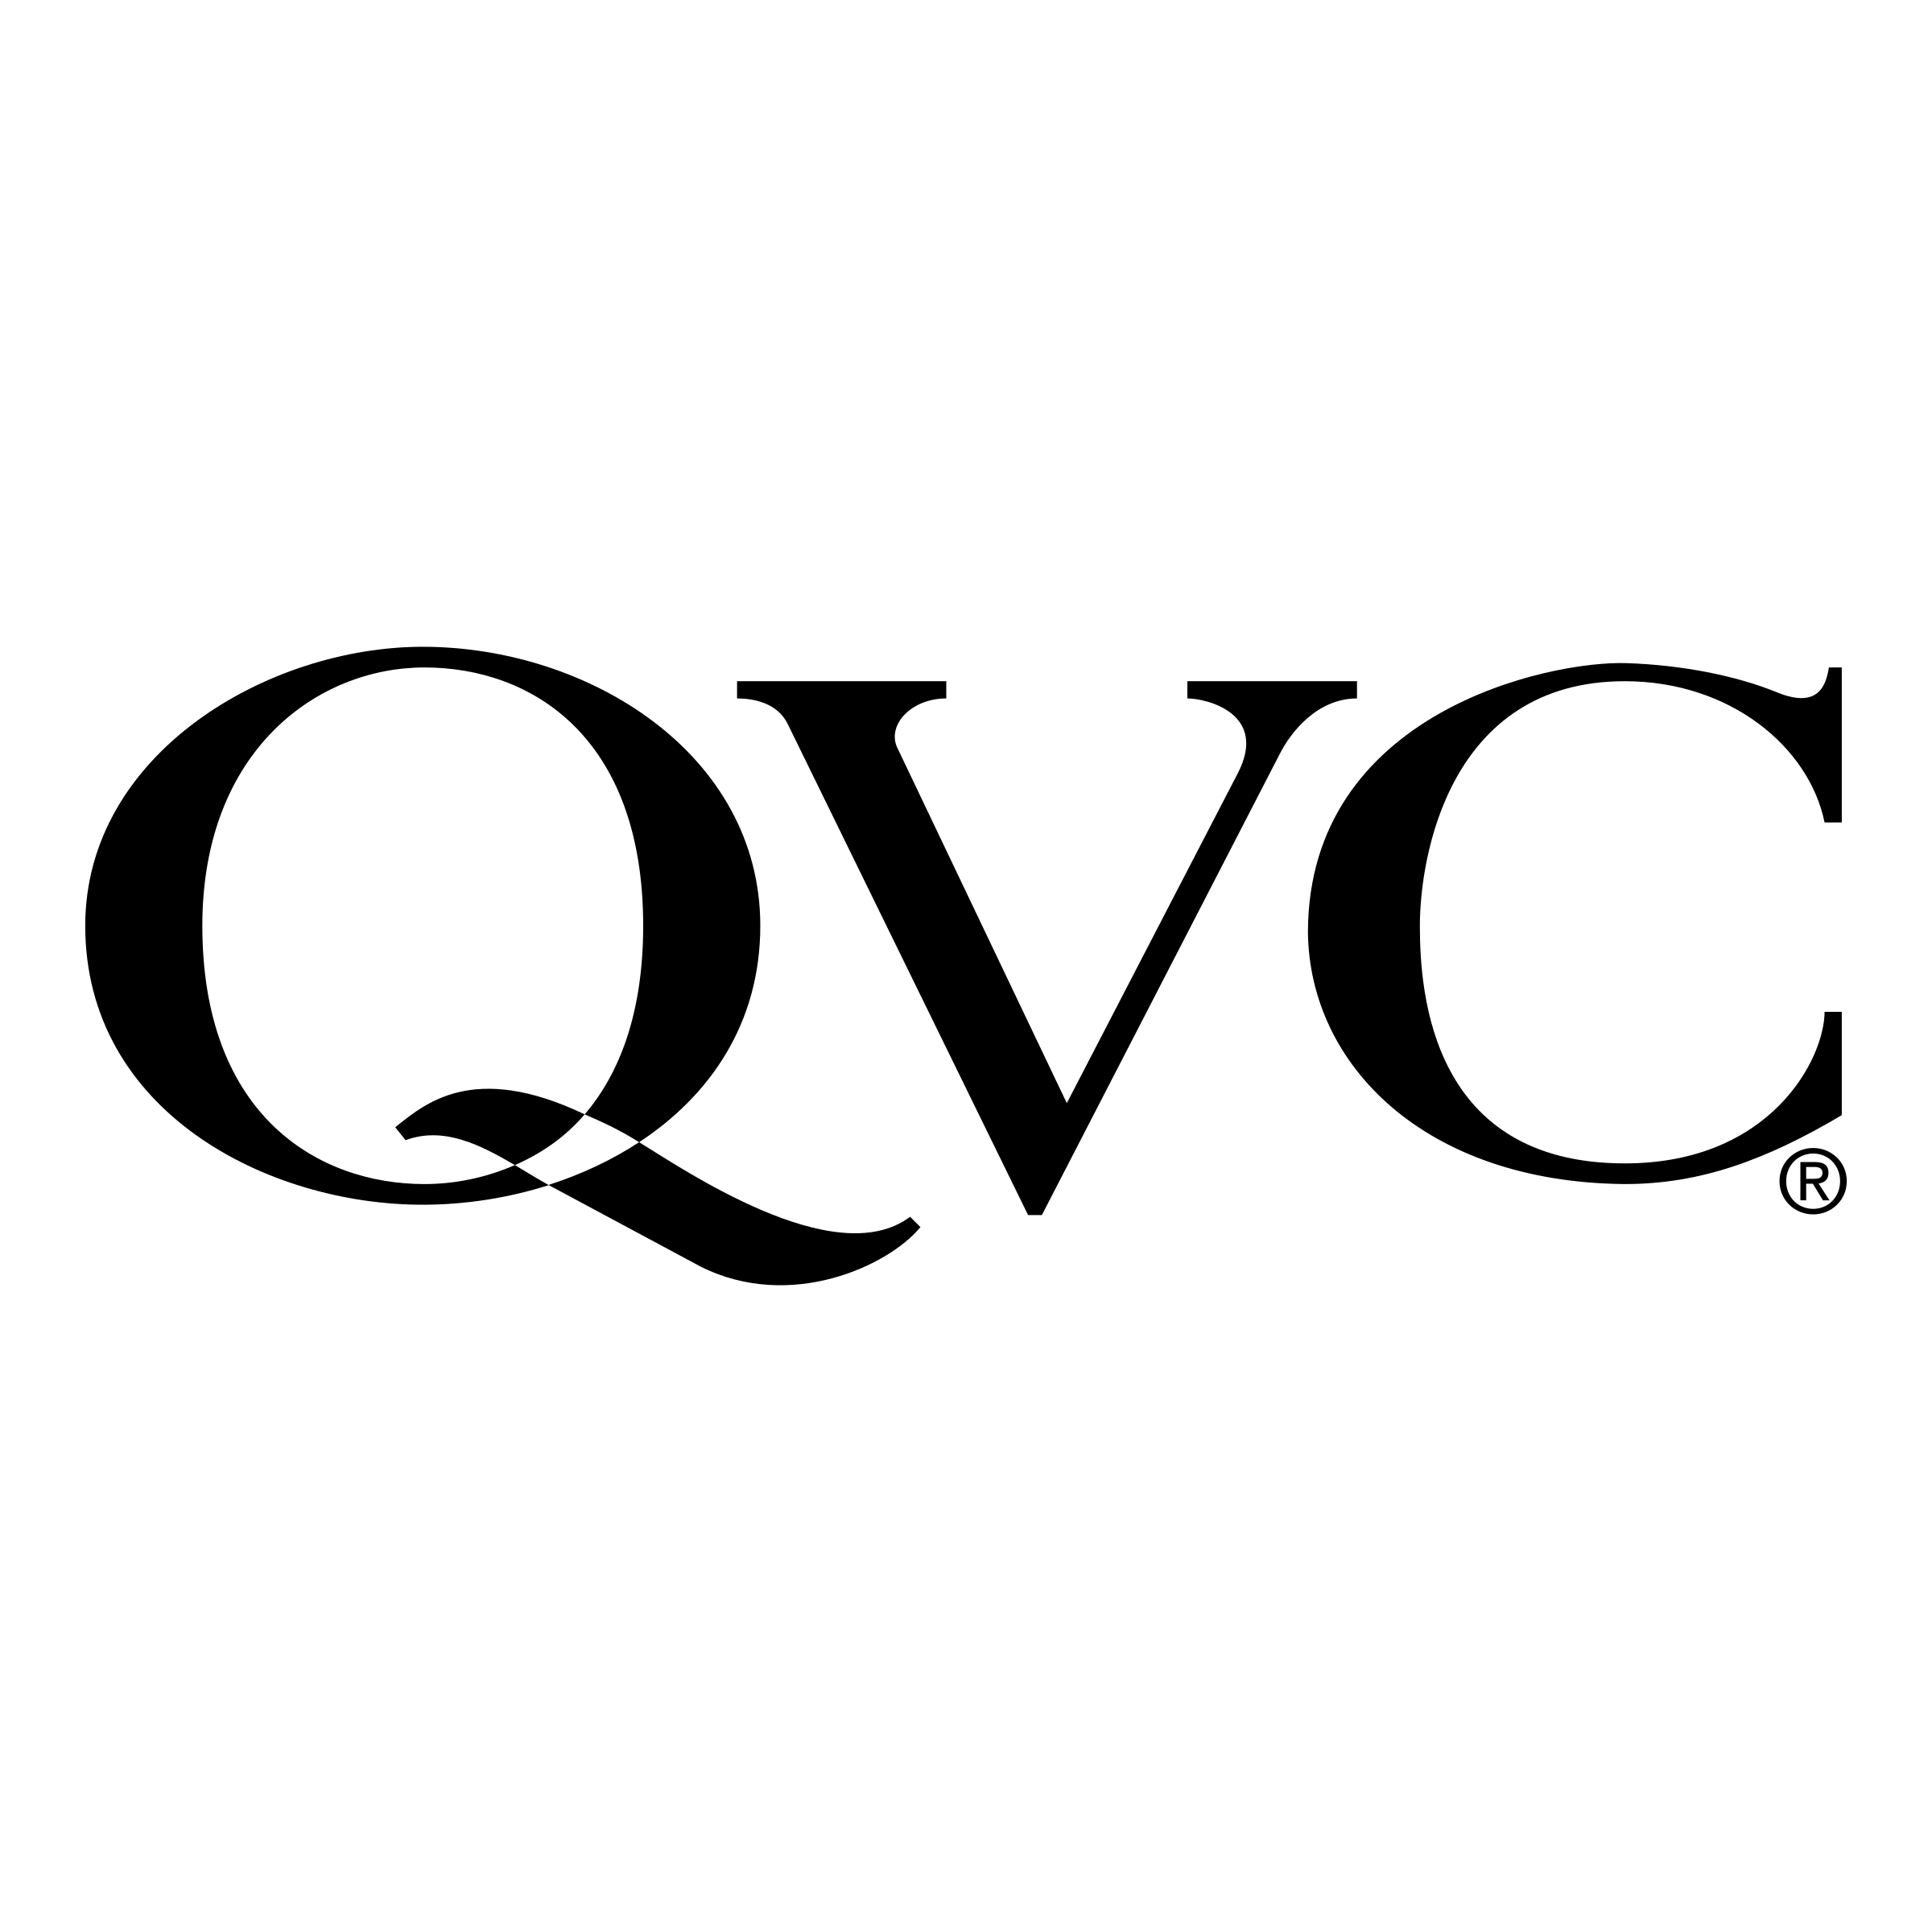 QVC Logo - QVC Logo PNG Transparent & SVG Vector - Freebie Supply